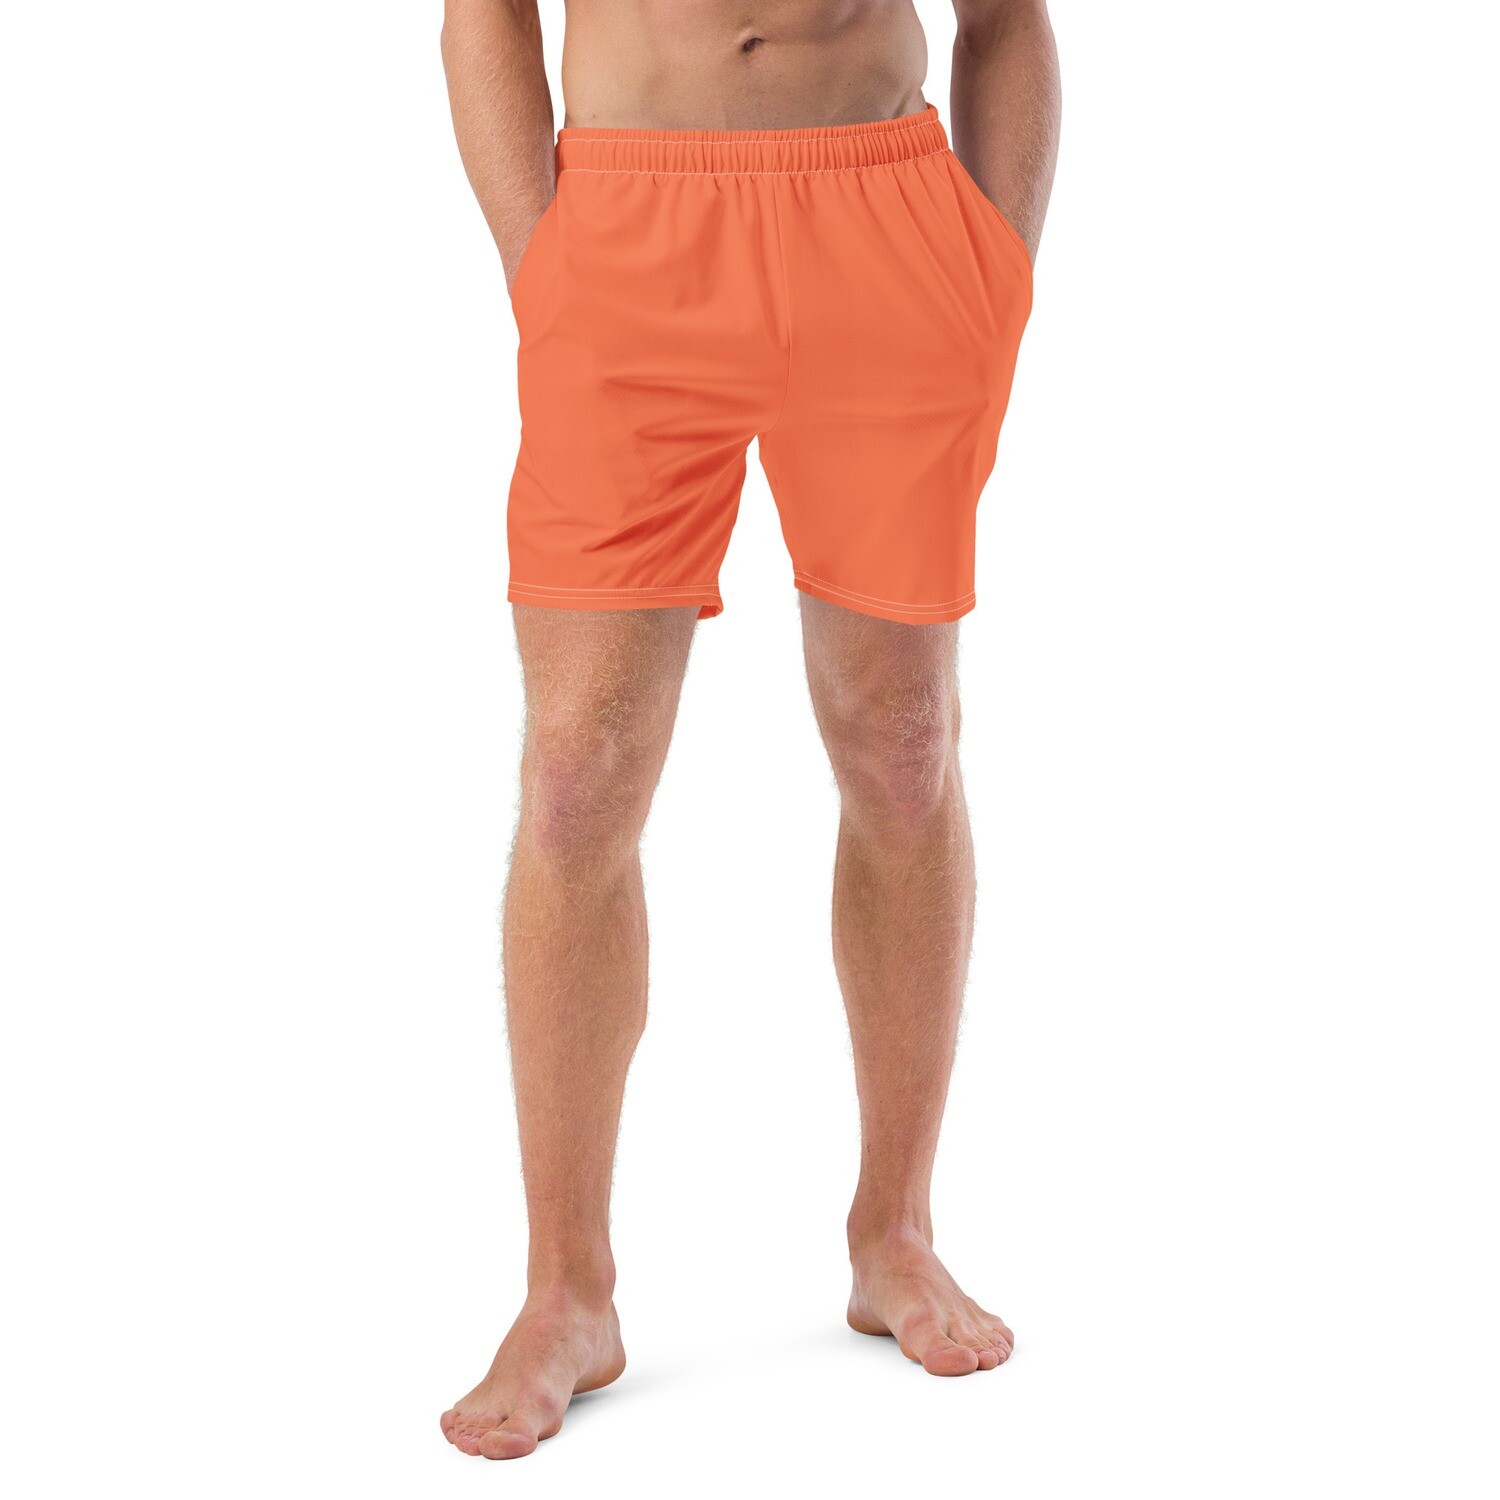 Men's orange swim trunks in sizes 2XS-6XL